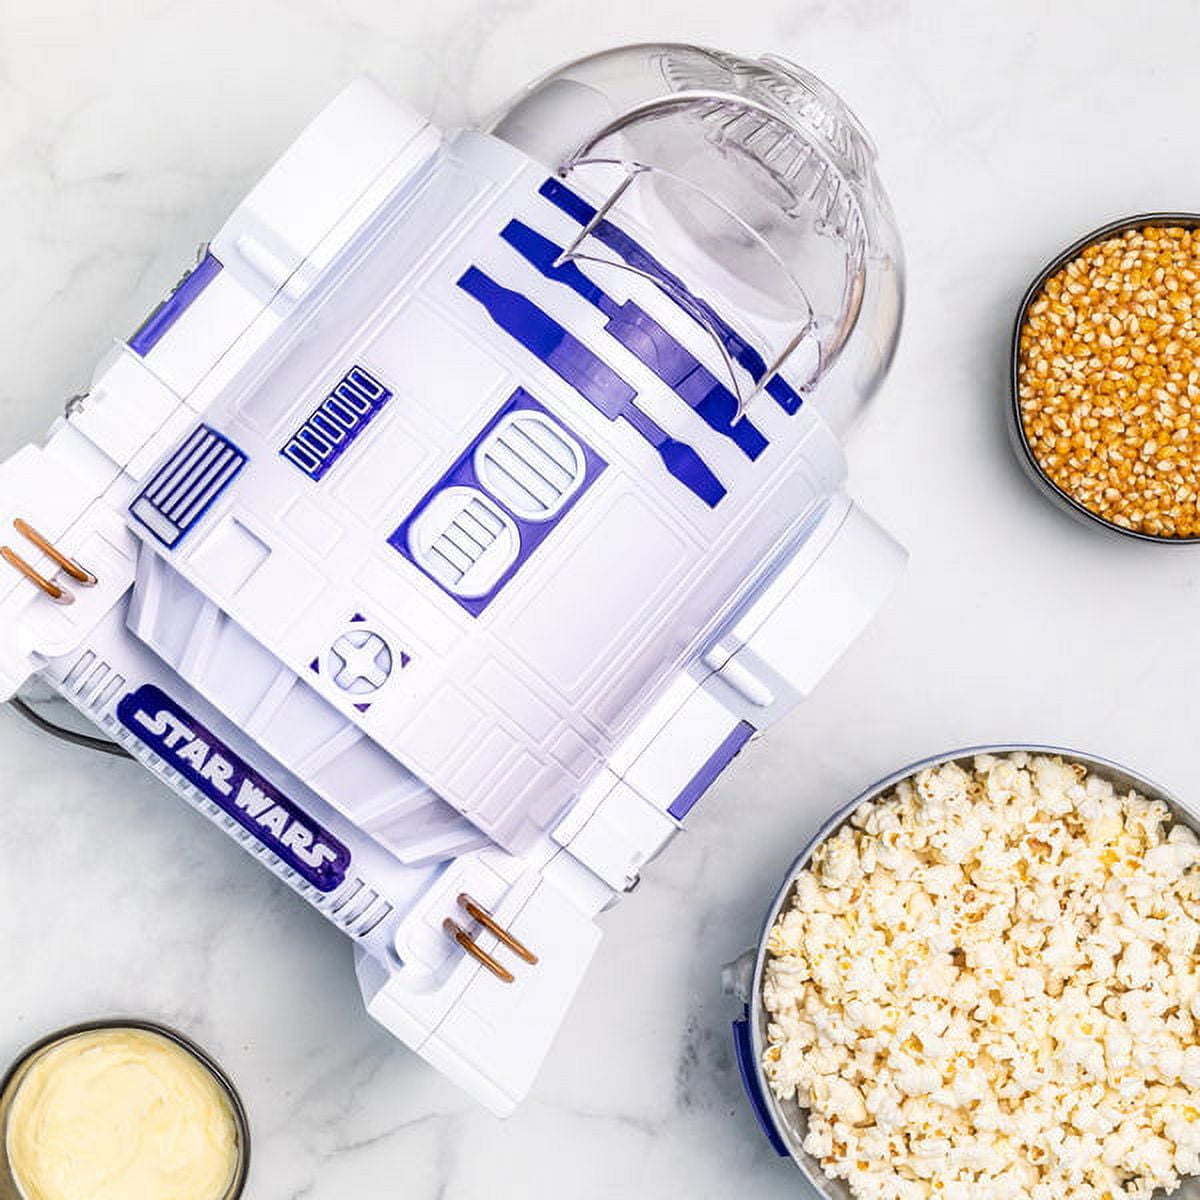  Star Wars R2-D2 Popcorn Maker MULTI One Size: Home & Kitchen